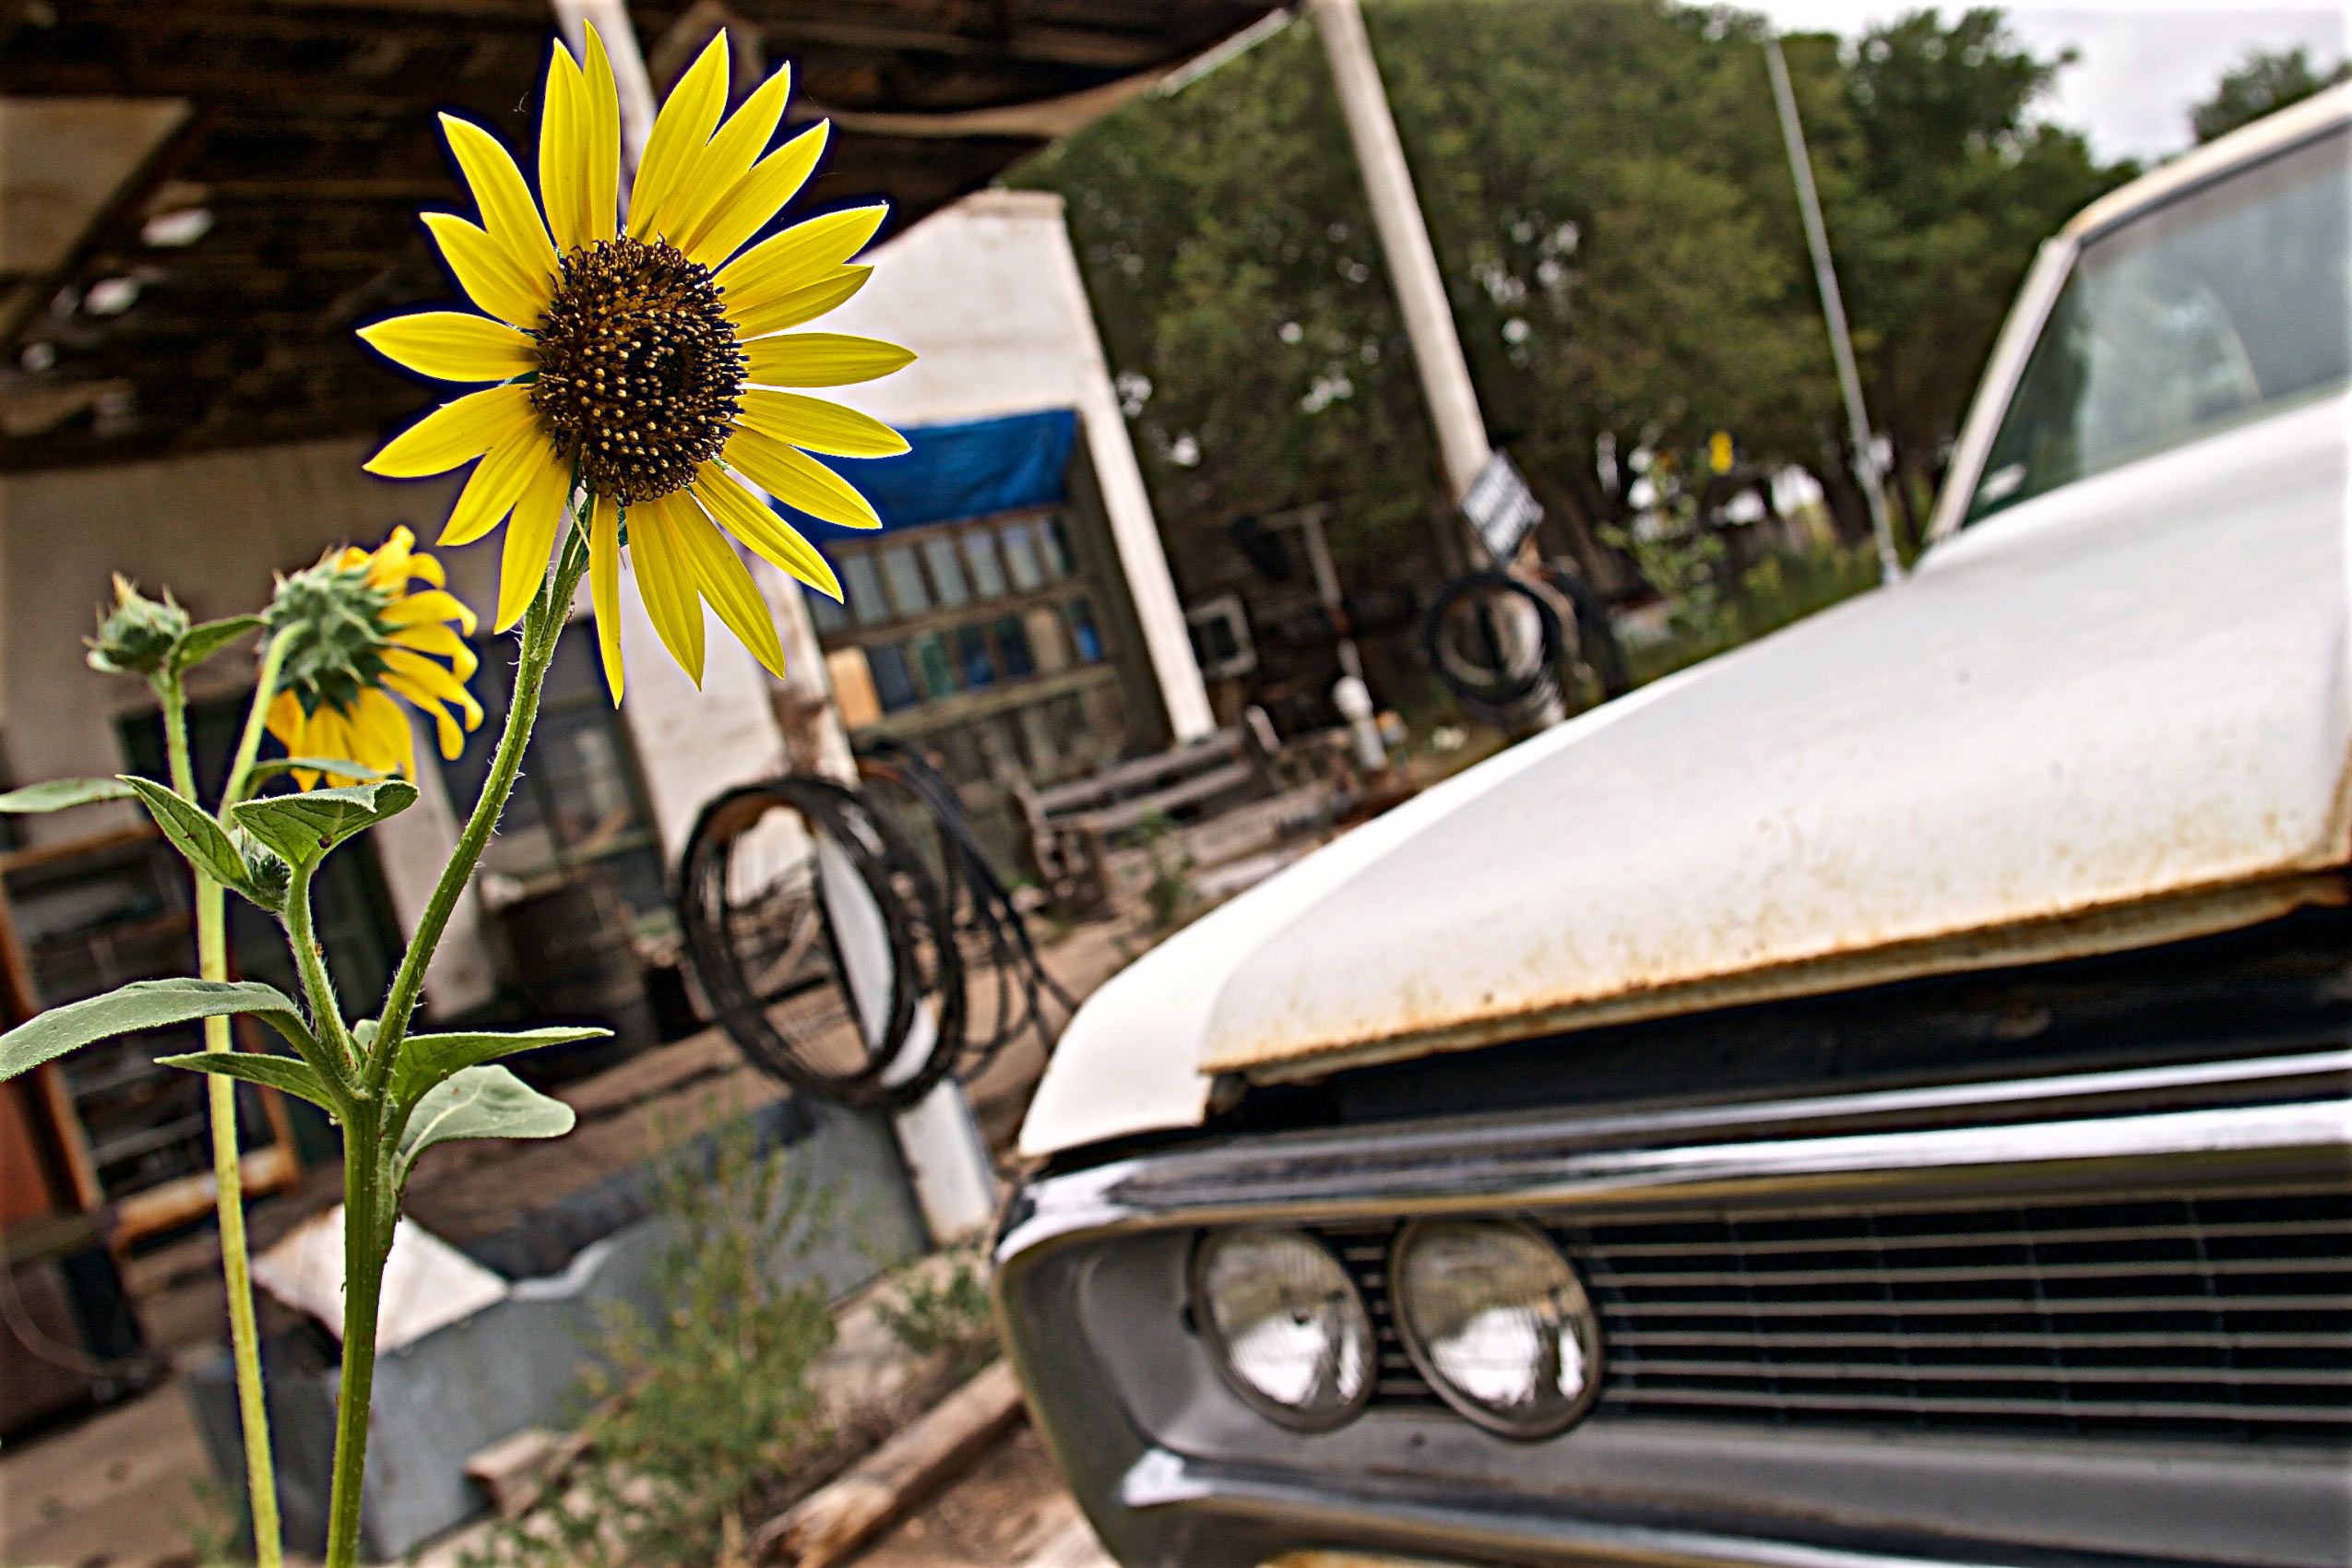 Sunflower Next to an Old Car